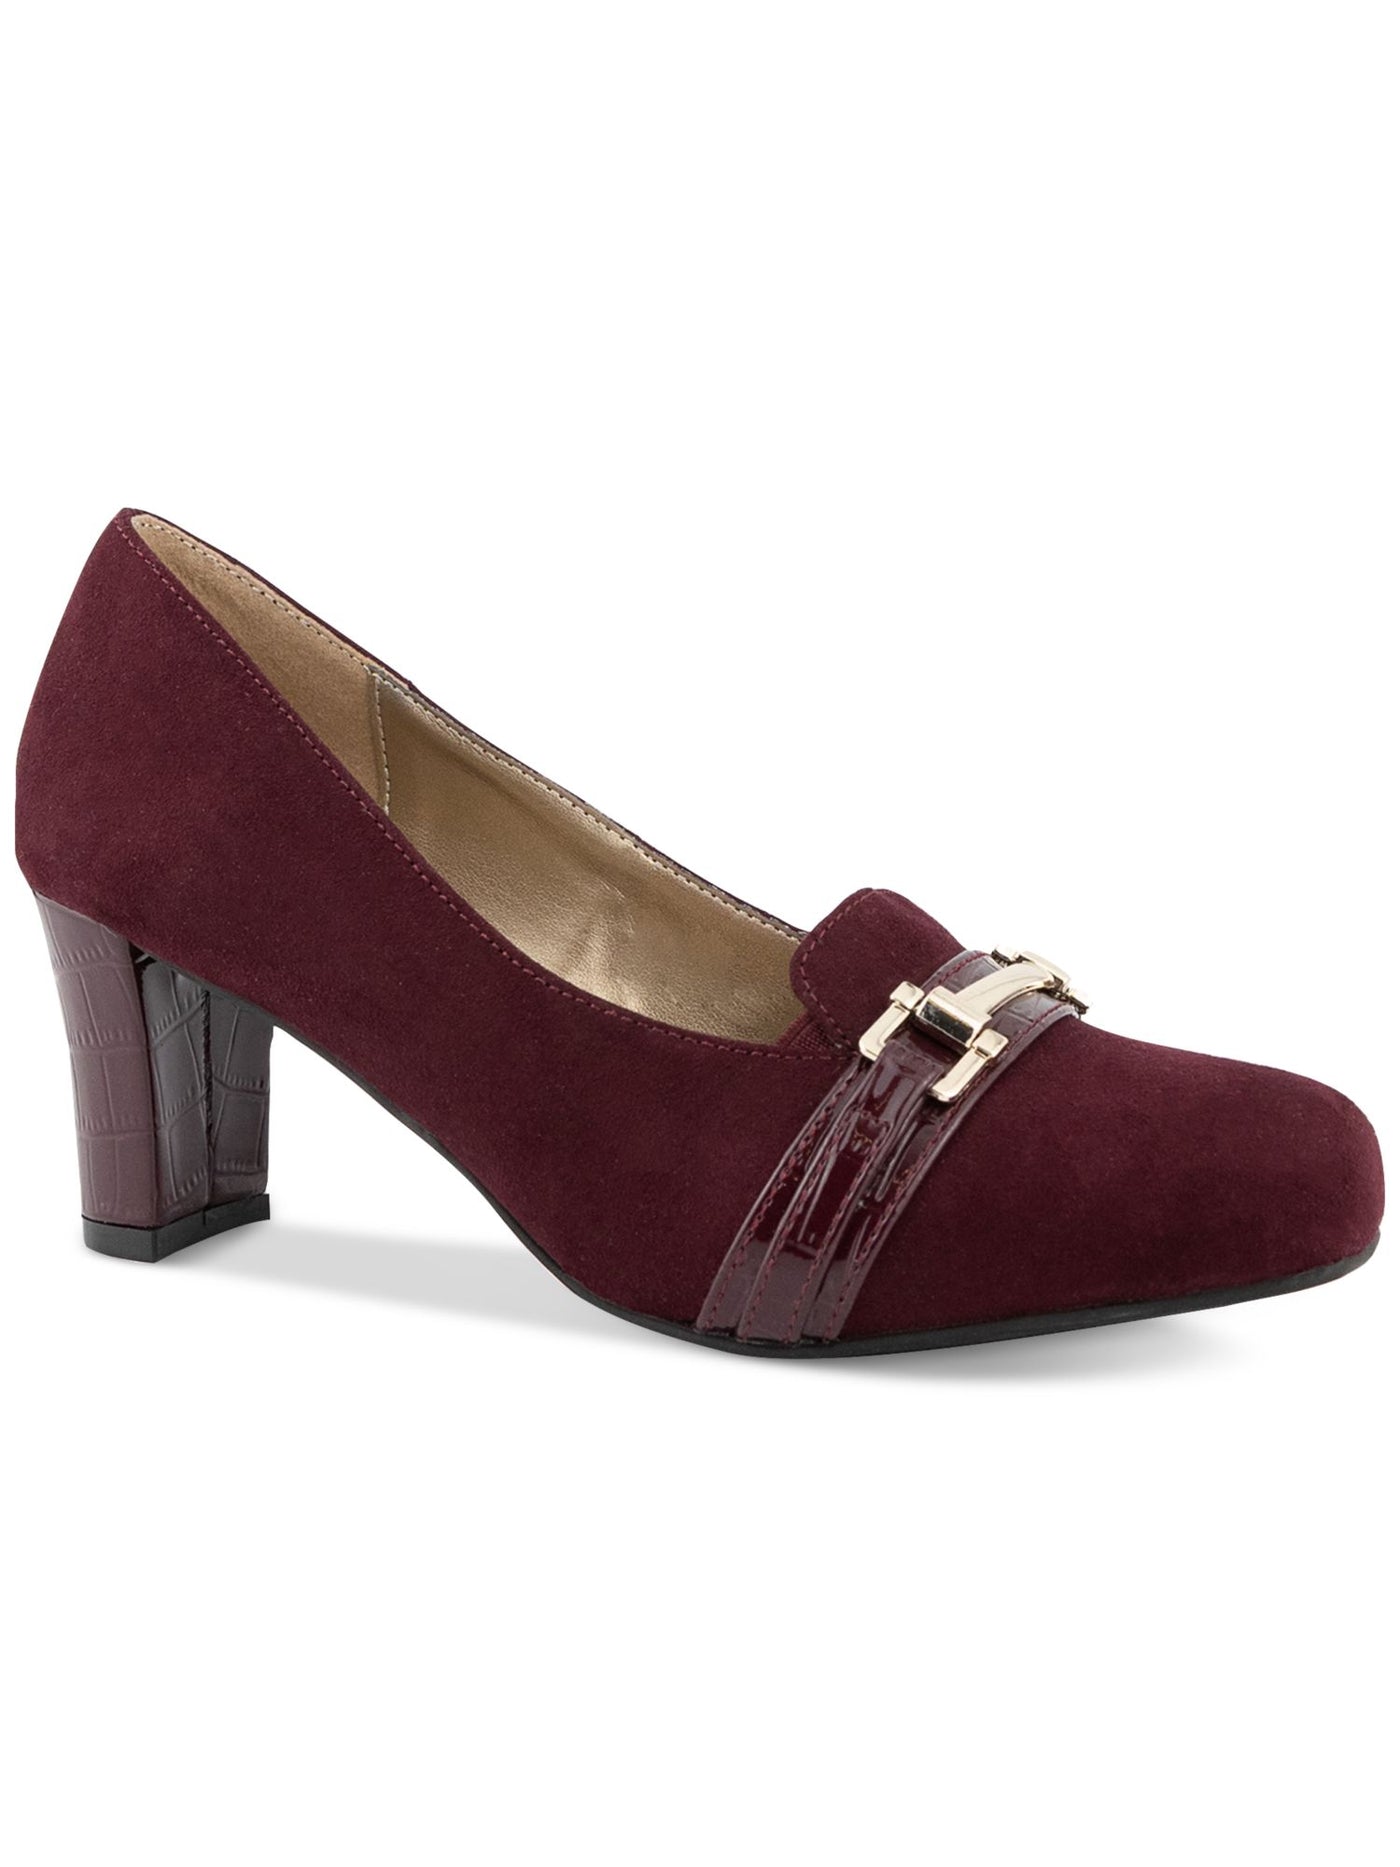 KAREN SCOTT Womens Burgundy Cushioned Penzey Almond Toe Block Heel Slip On Dress Pumps Shoes 5 M